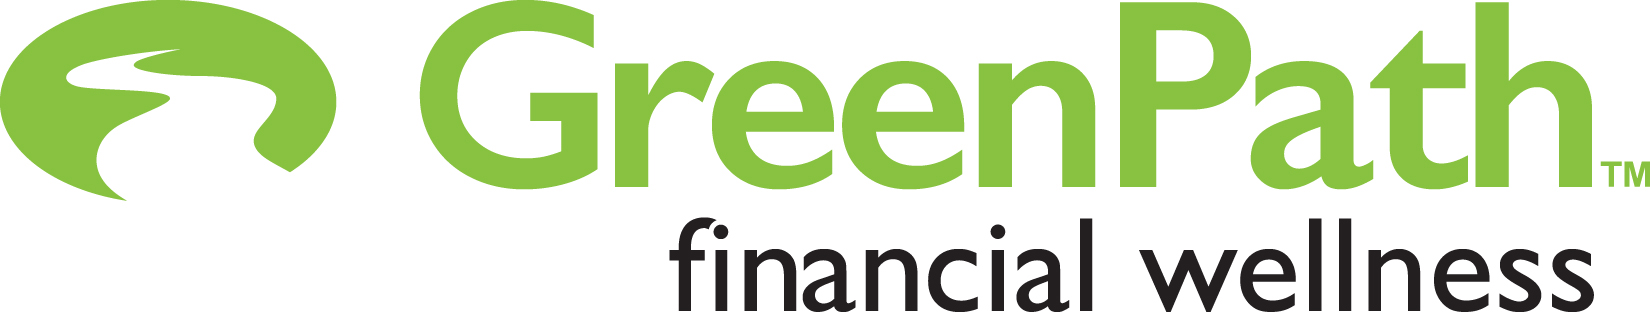 greenpath financial wellness